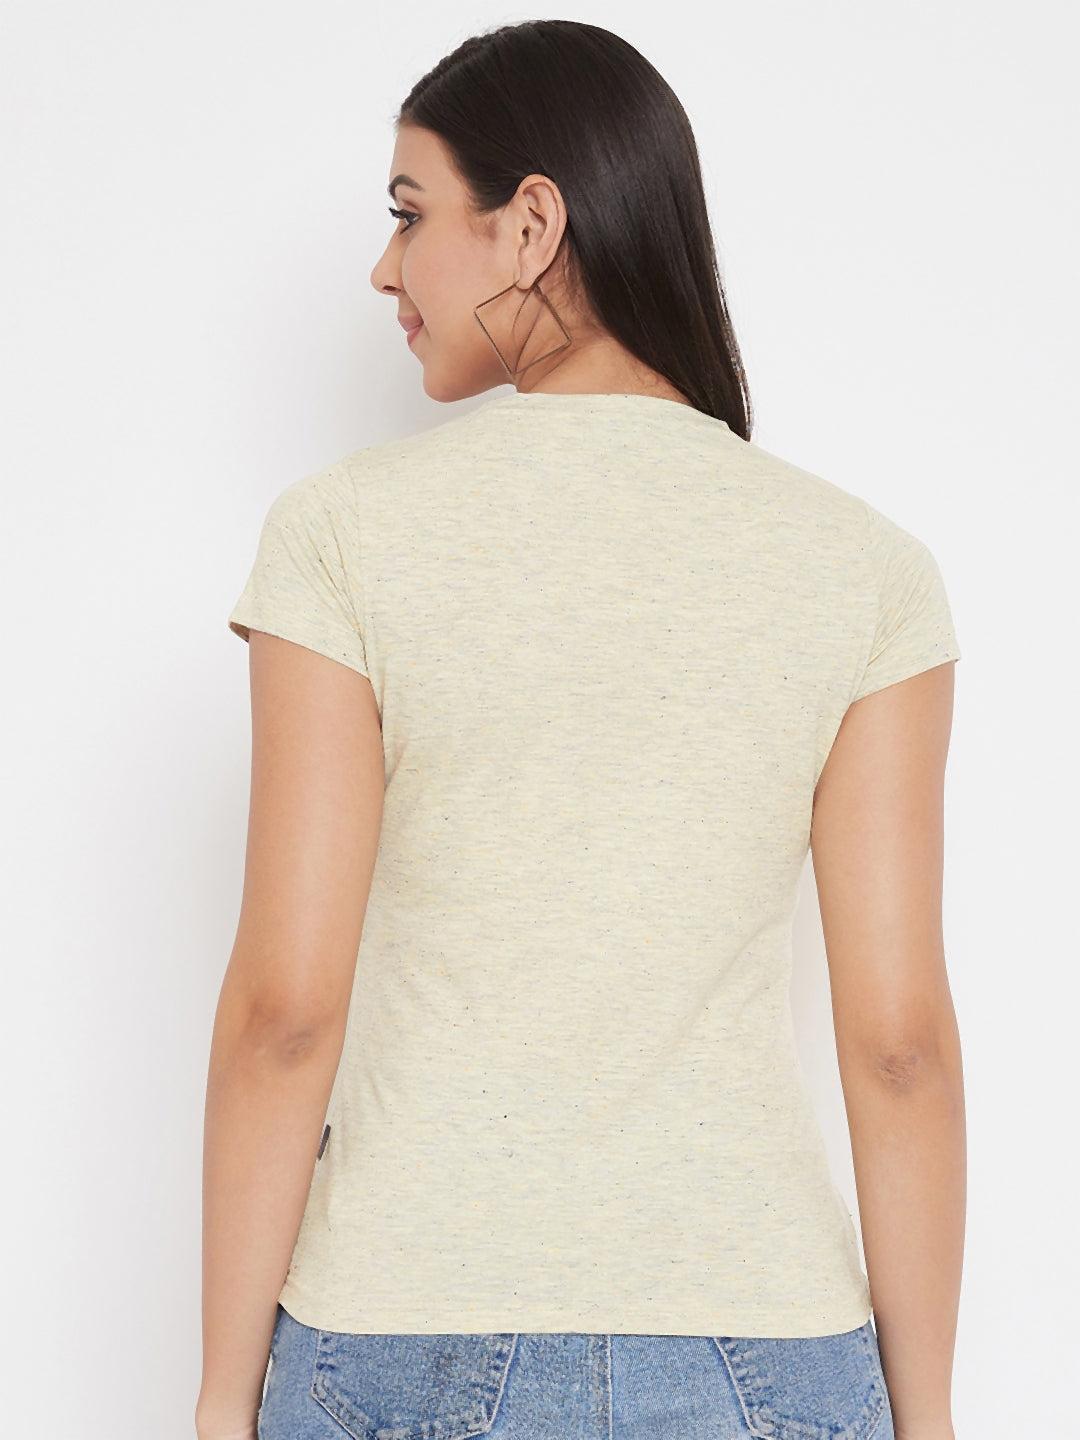 Beige Printed T-shirt - Women T-Shirts